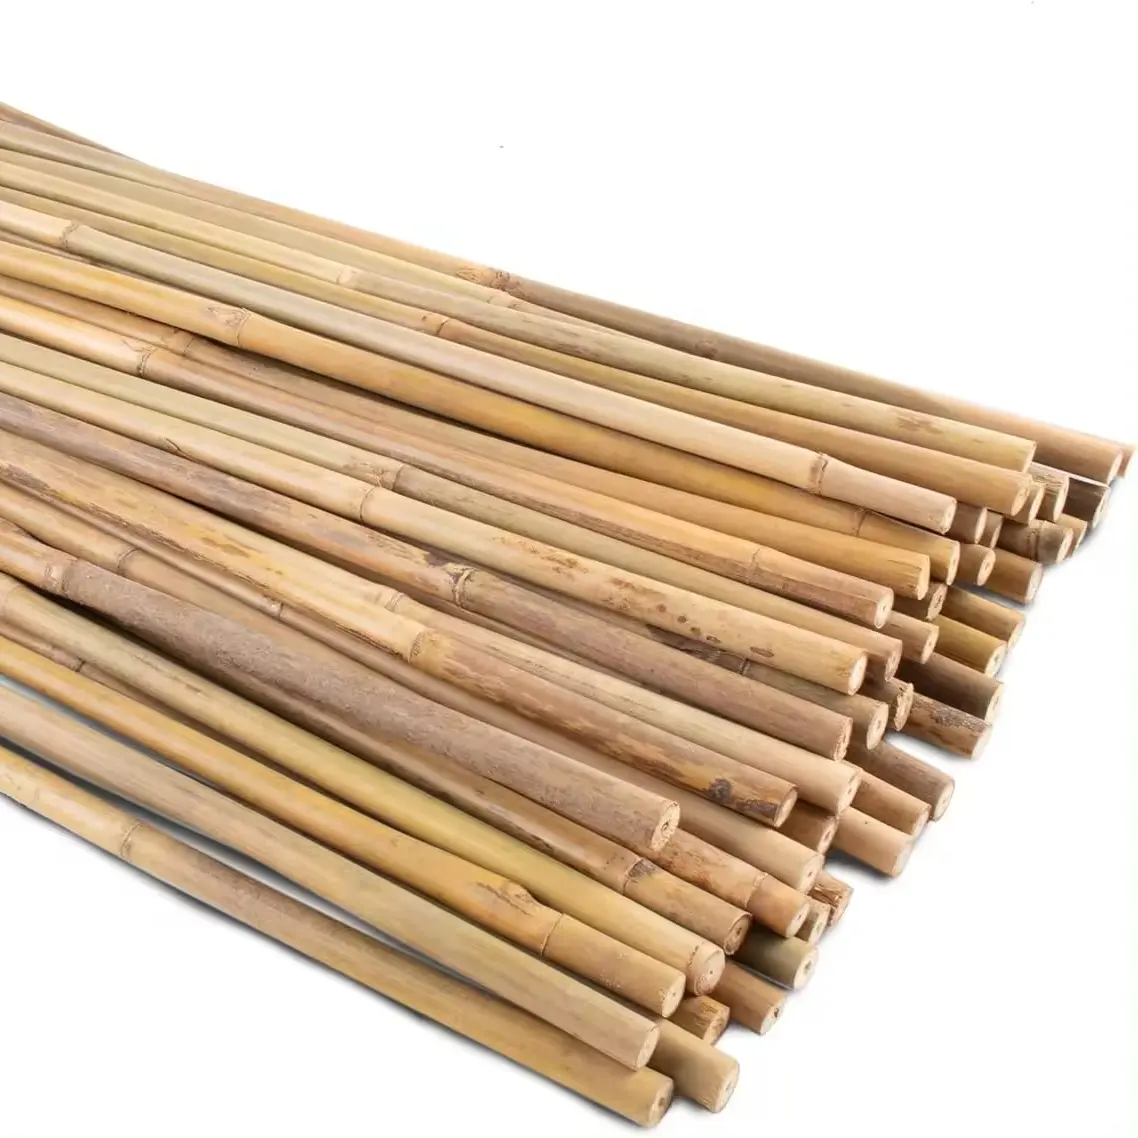 Tongkat bambu hijau batang tanaman bambu seluruh produksi atau tiang produk berkualitas tinggi